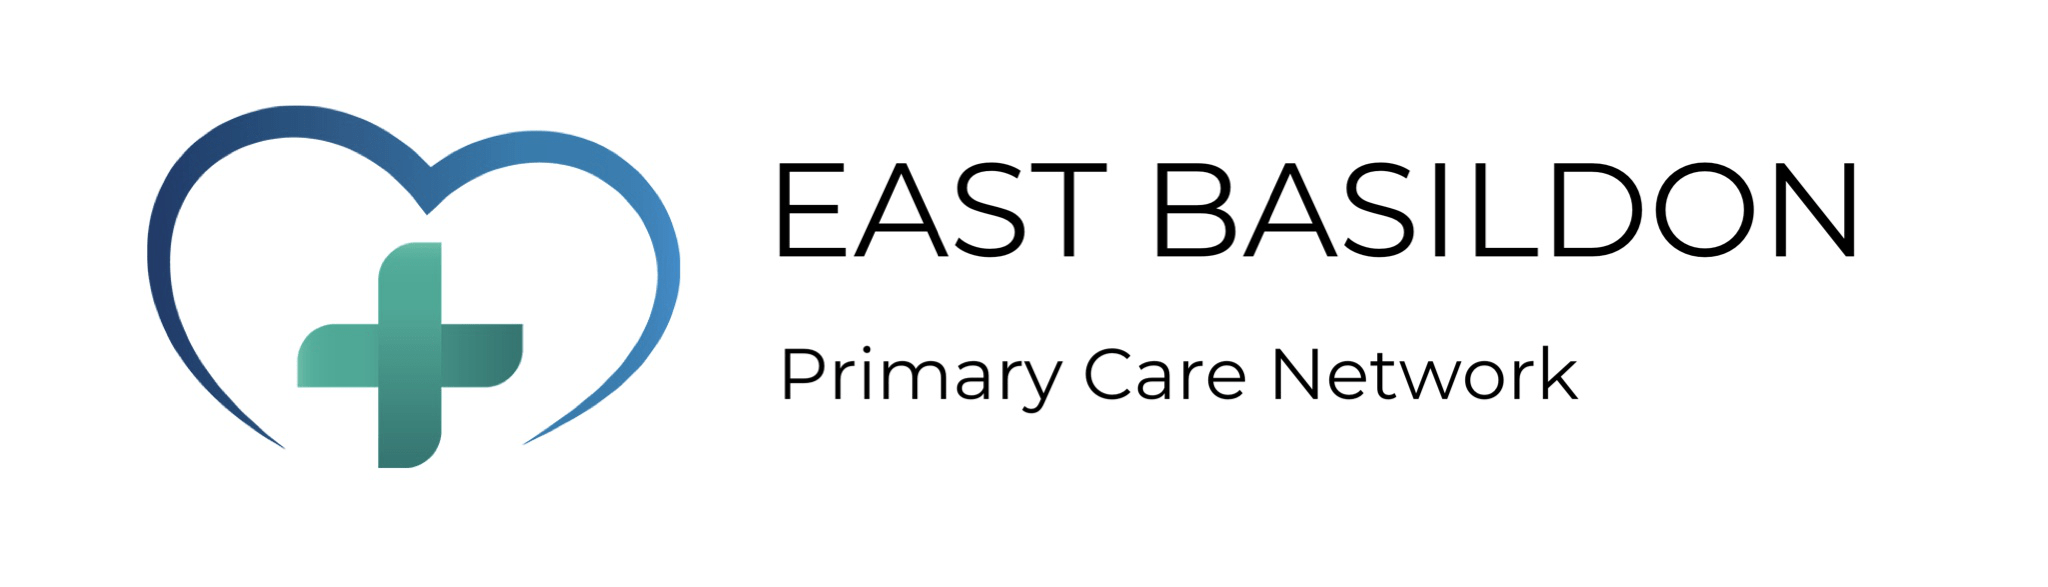 East Basildon Primary Care Network logo